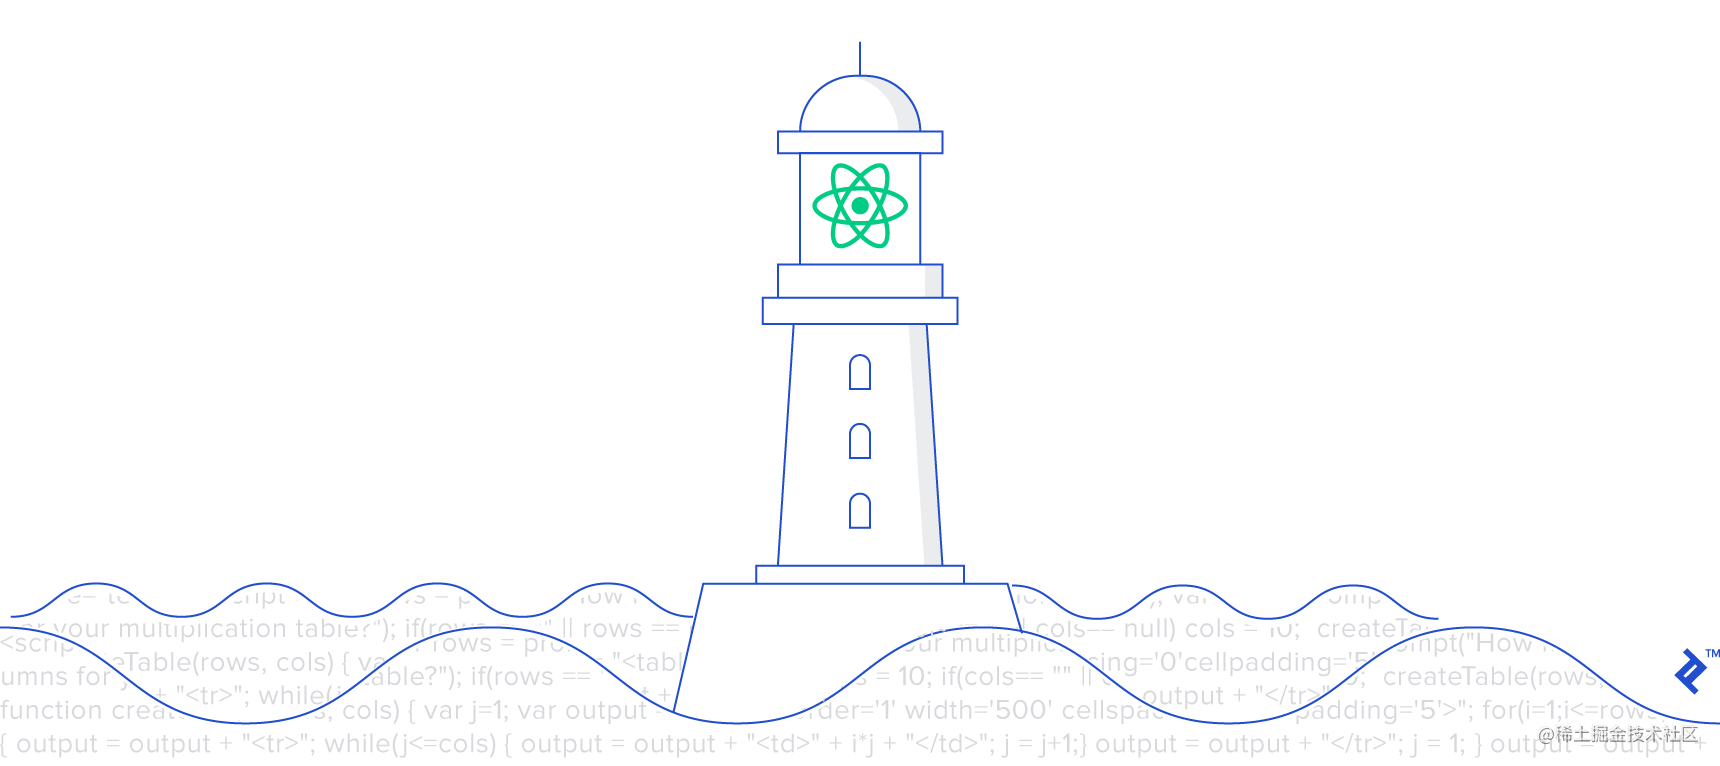 React 是一座耸立在 JavaScript 代码海上醒目的灯塔